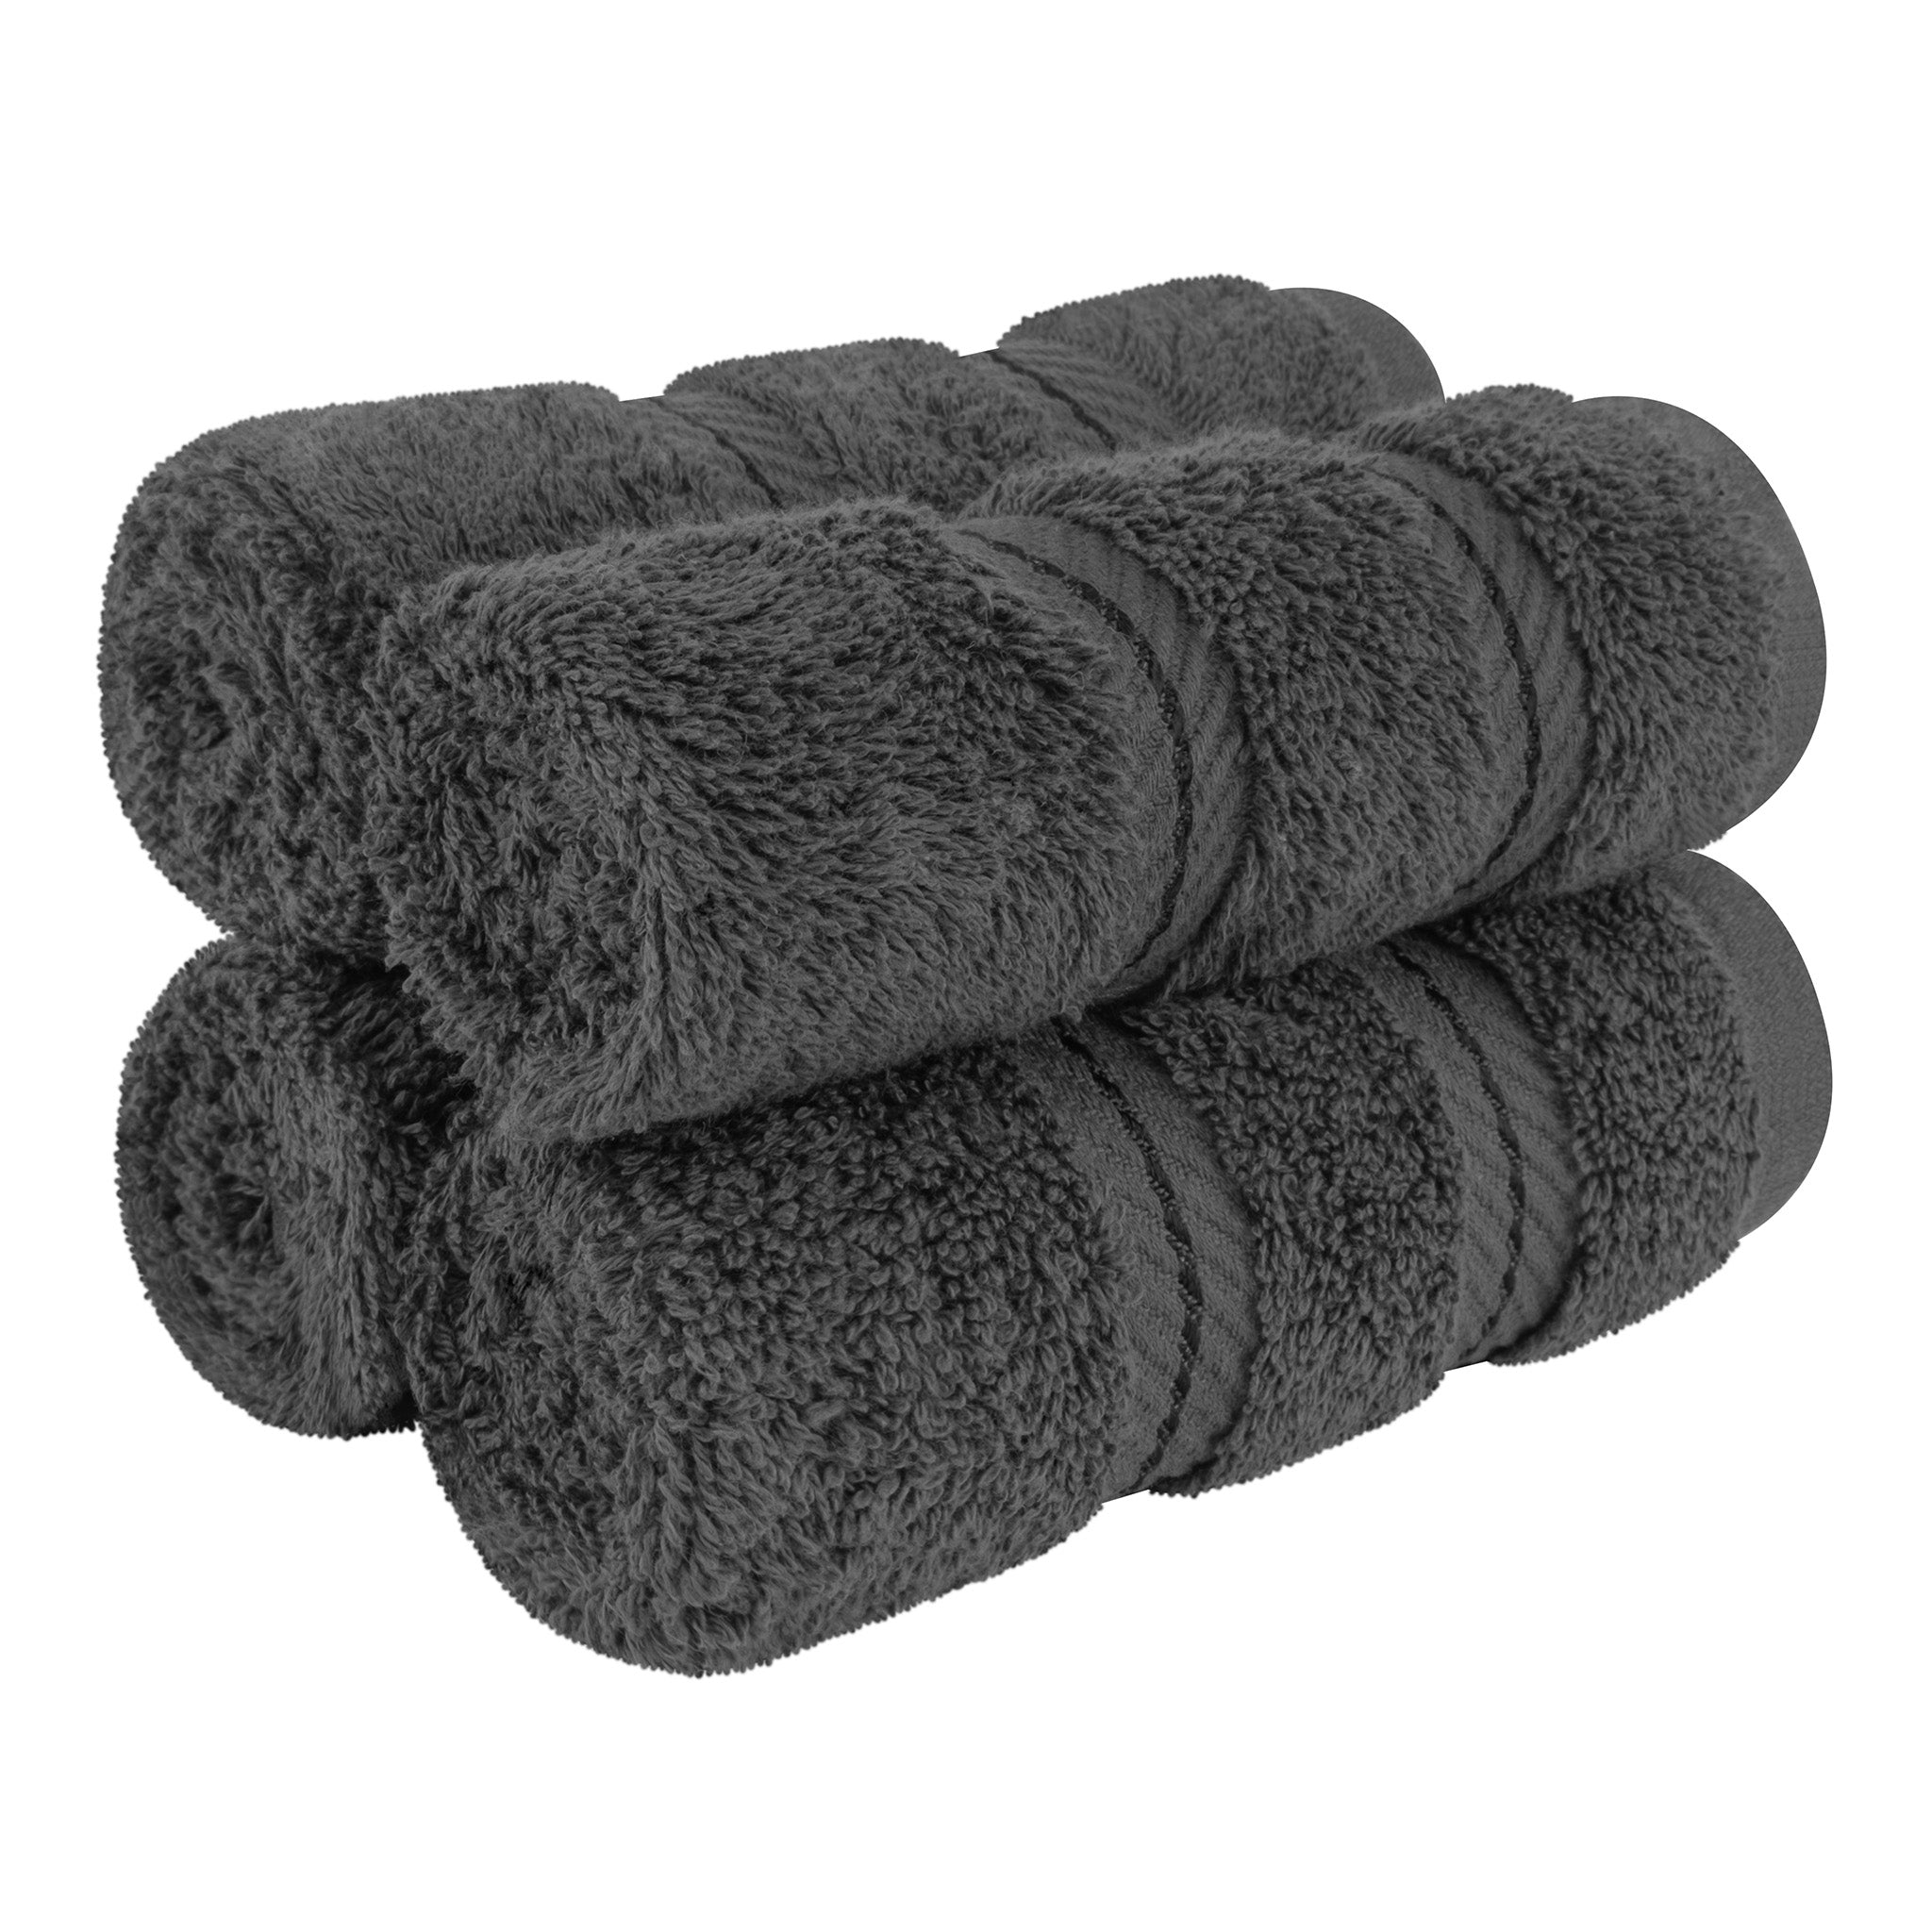 100% Turkish Cotton Benzoyl Peroxide Resistant 4 Piece Makeup & Face Towel  Set - Towels & Washcloths